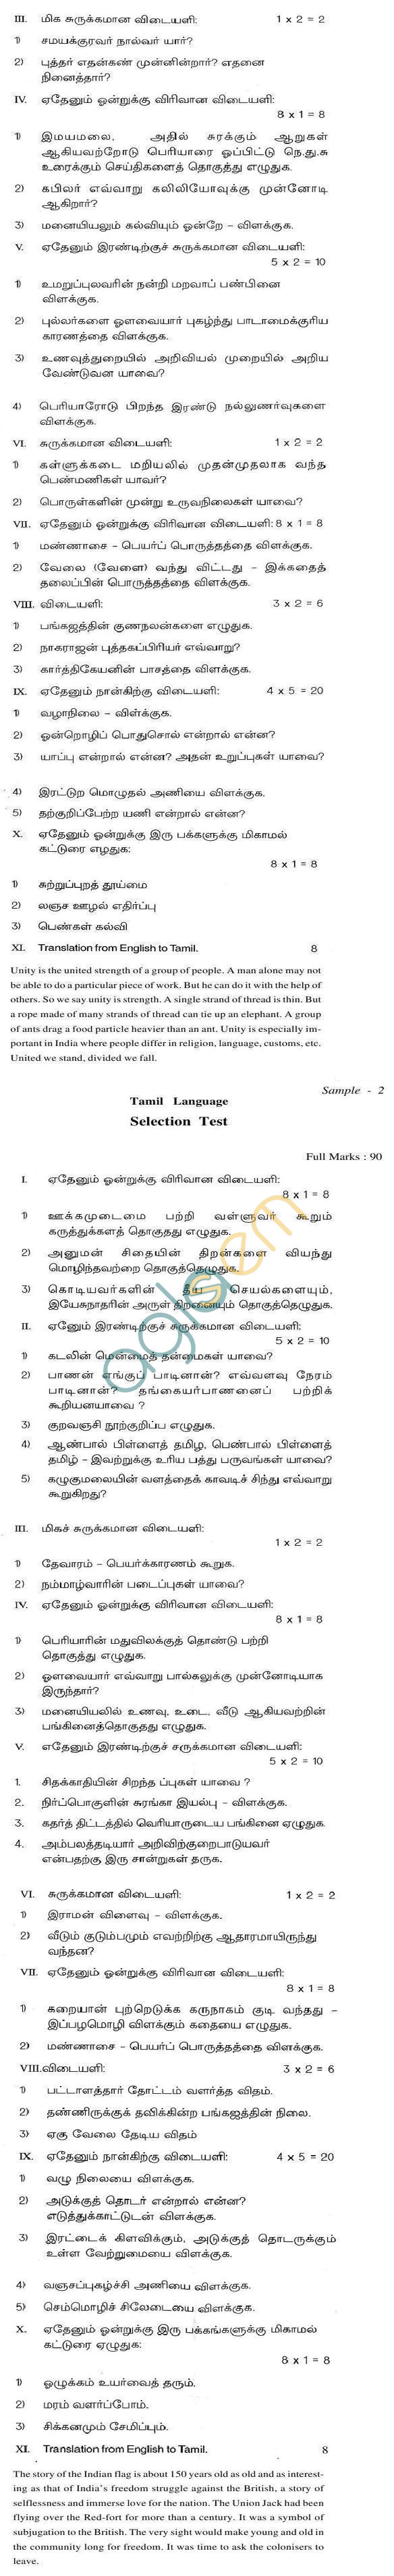 WB Board Sample Question Papers for Madhyamik Pariksha (Class 10) - Tamil